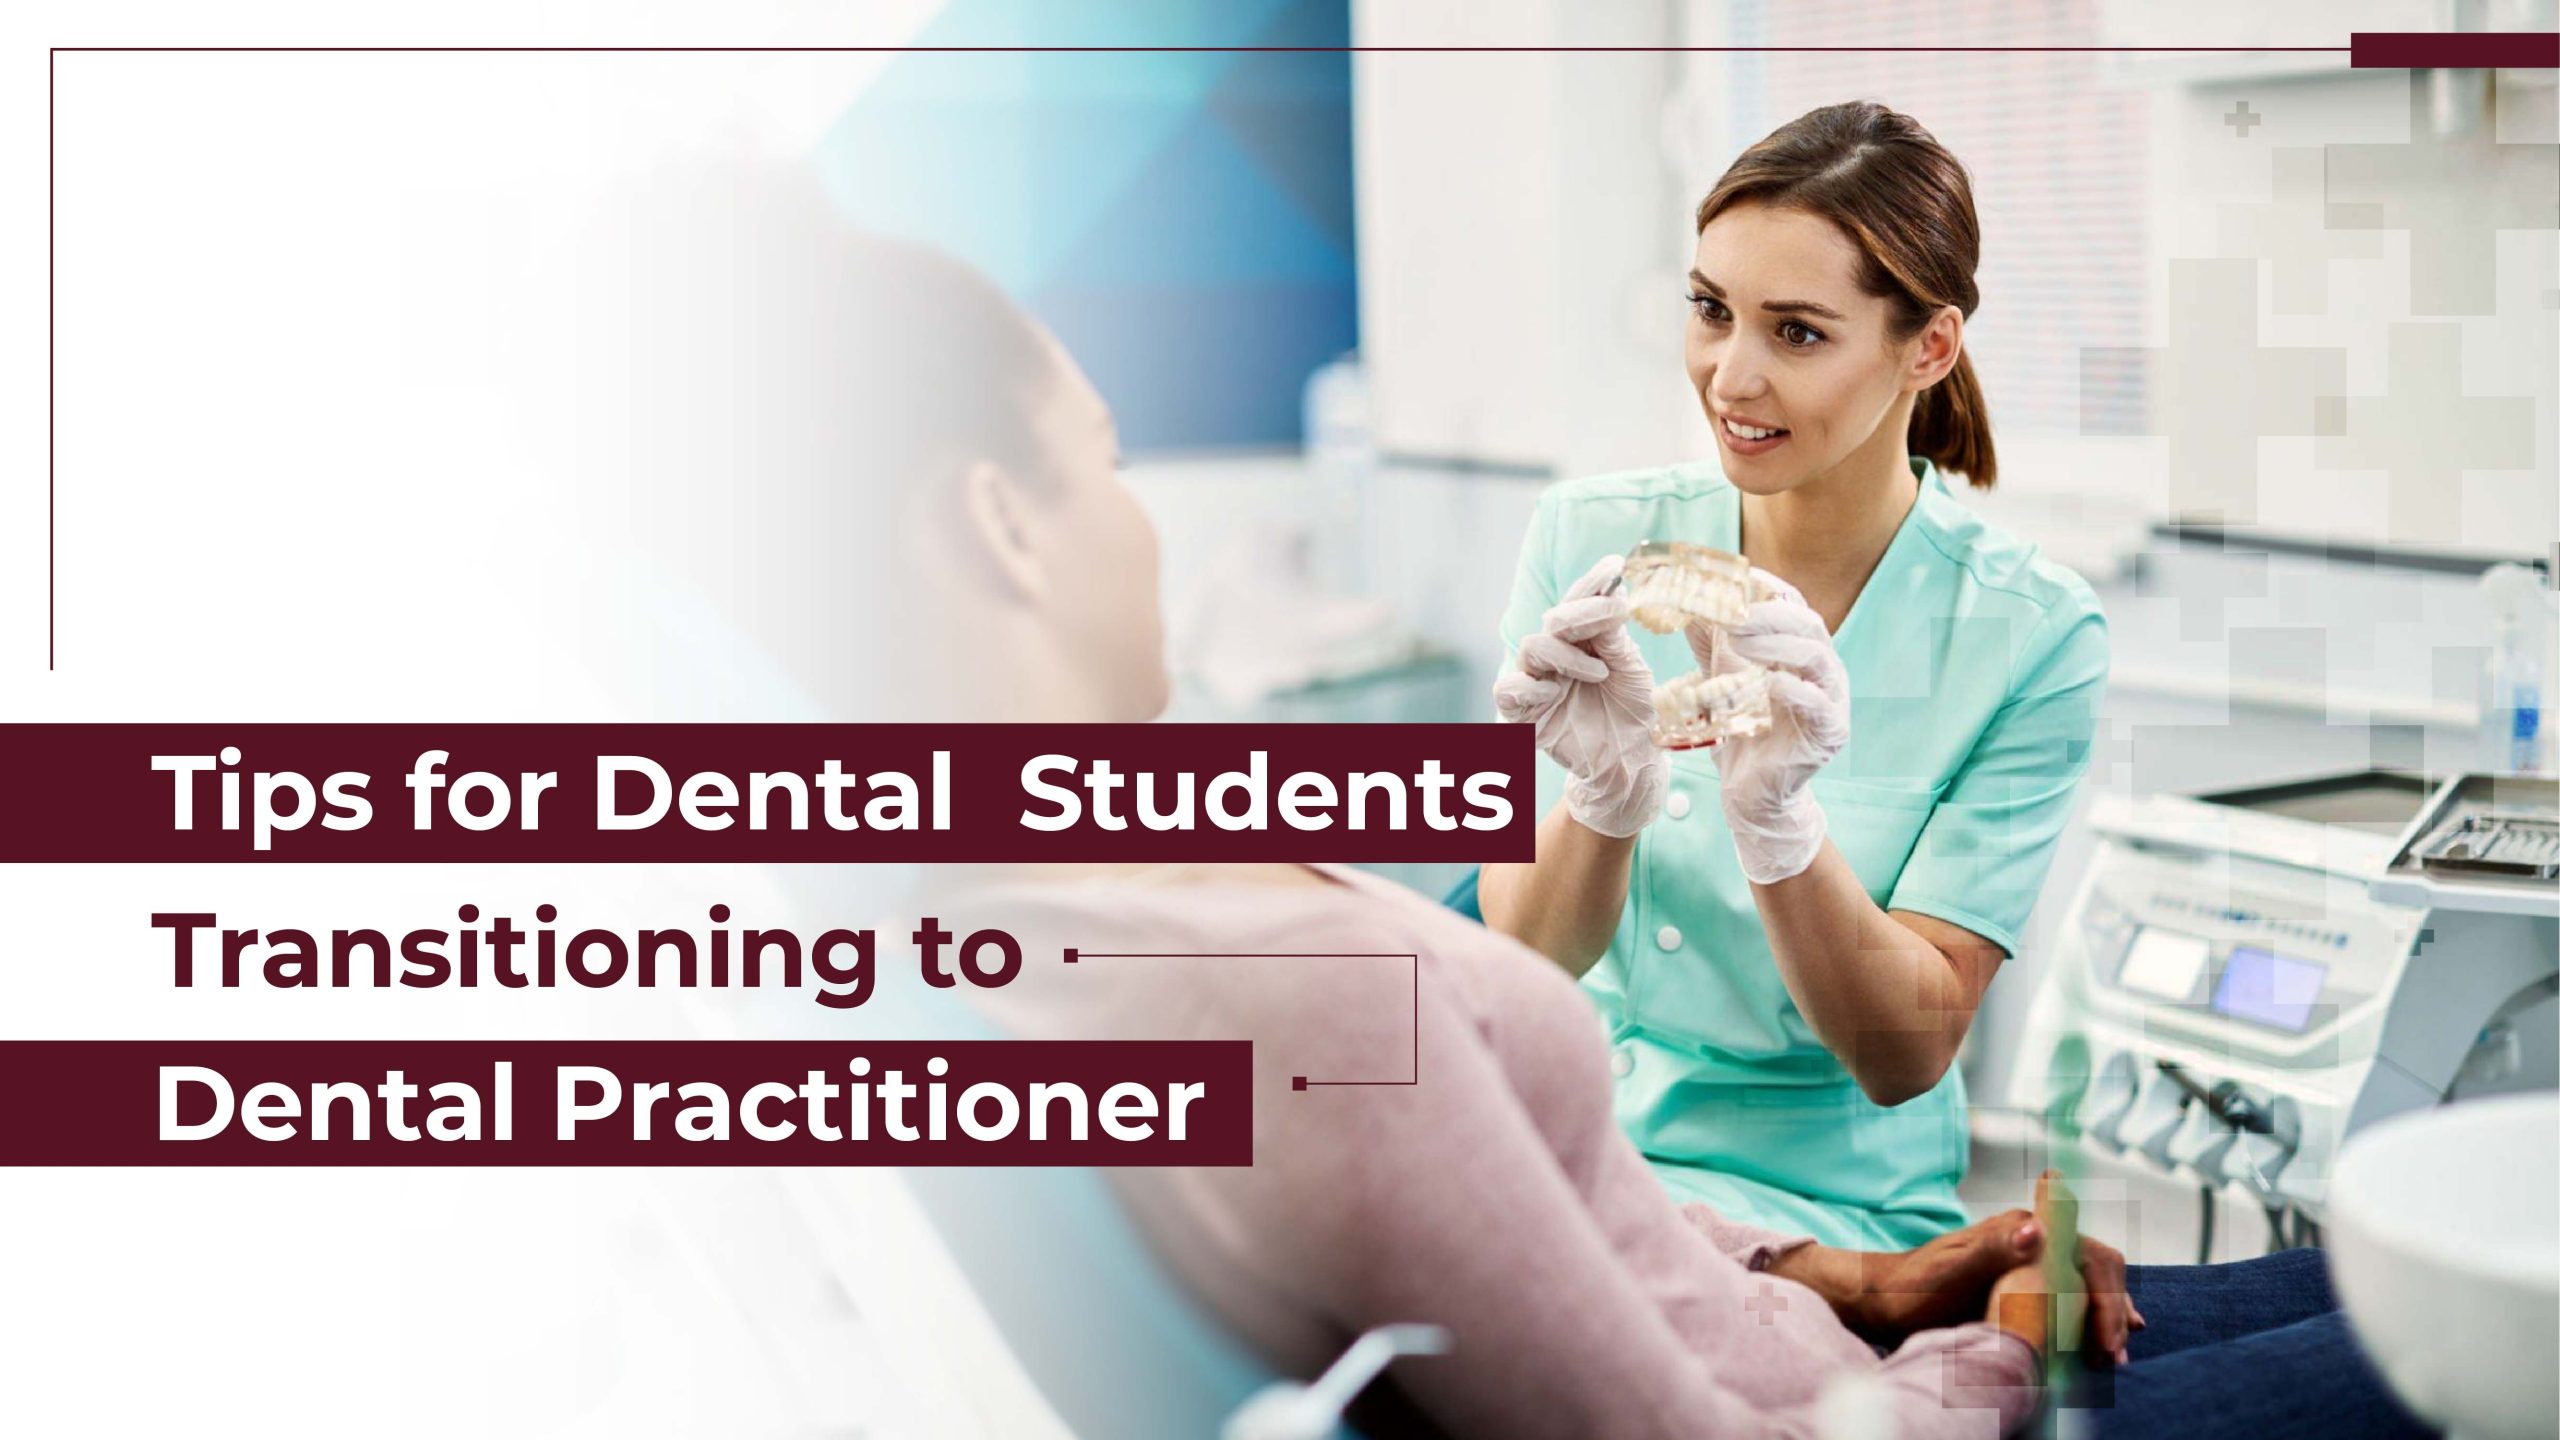 Tips for Dental Students Transitioning to Dental Practitioner